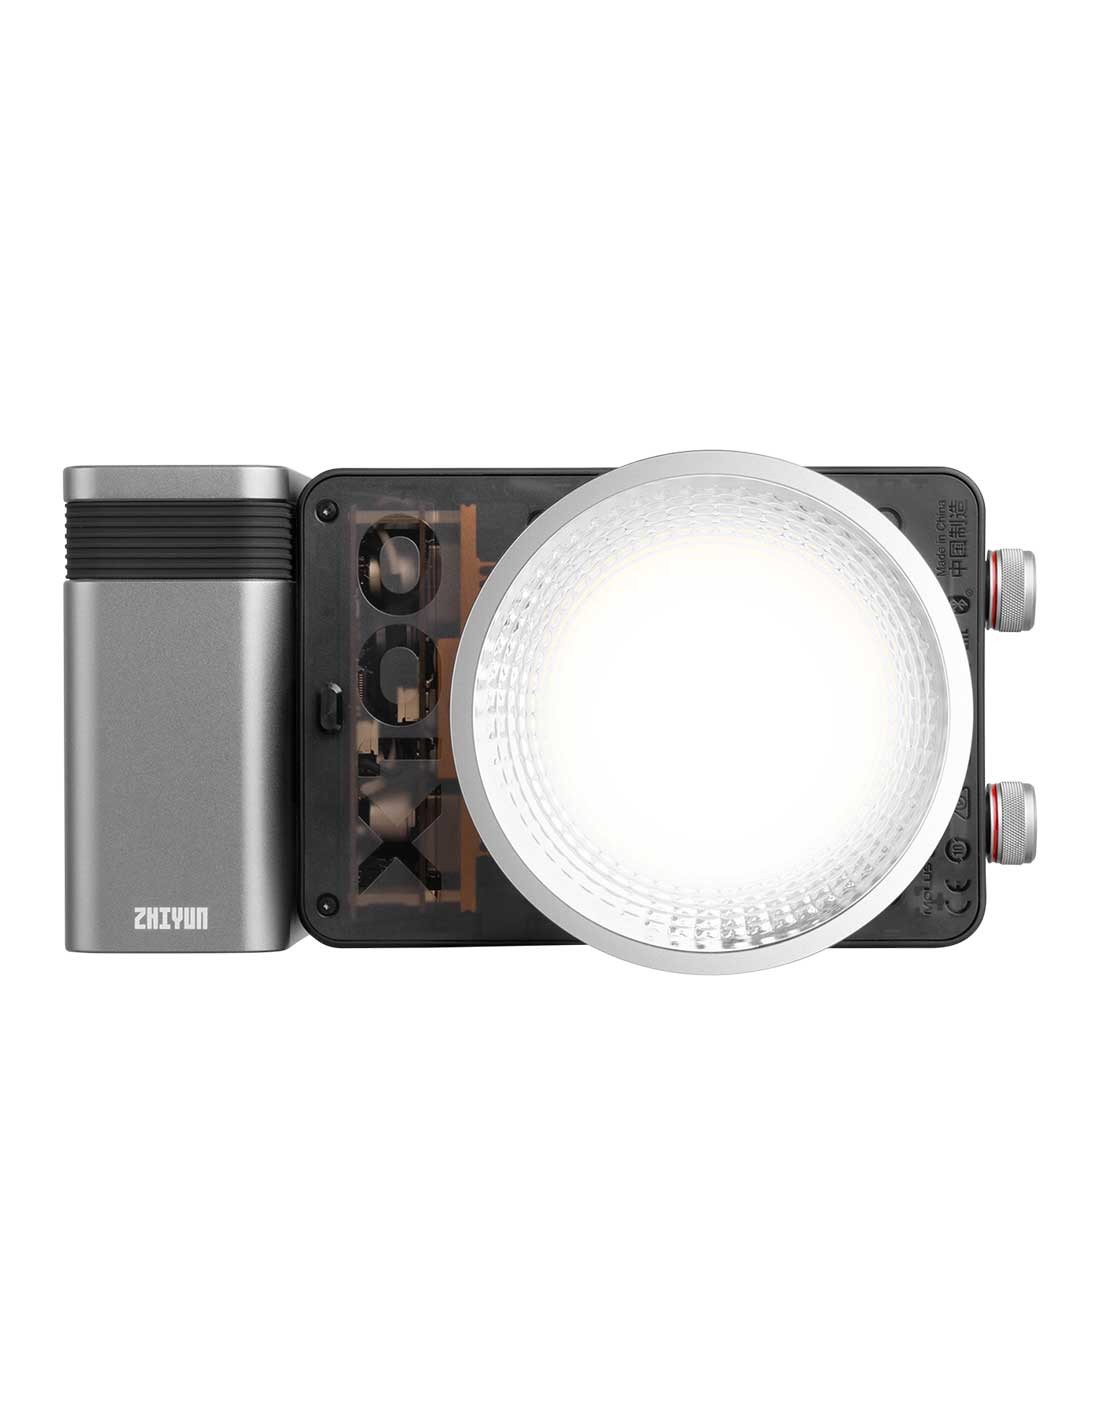 LUZ LED NEWEER - Iluminación potente para fotografías perfectas